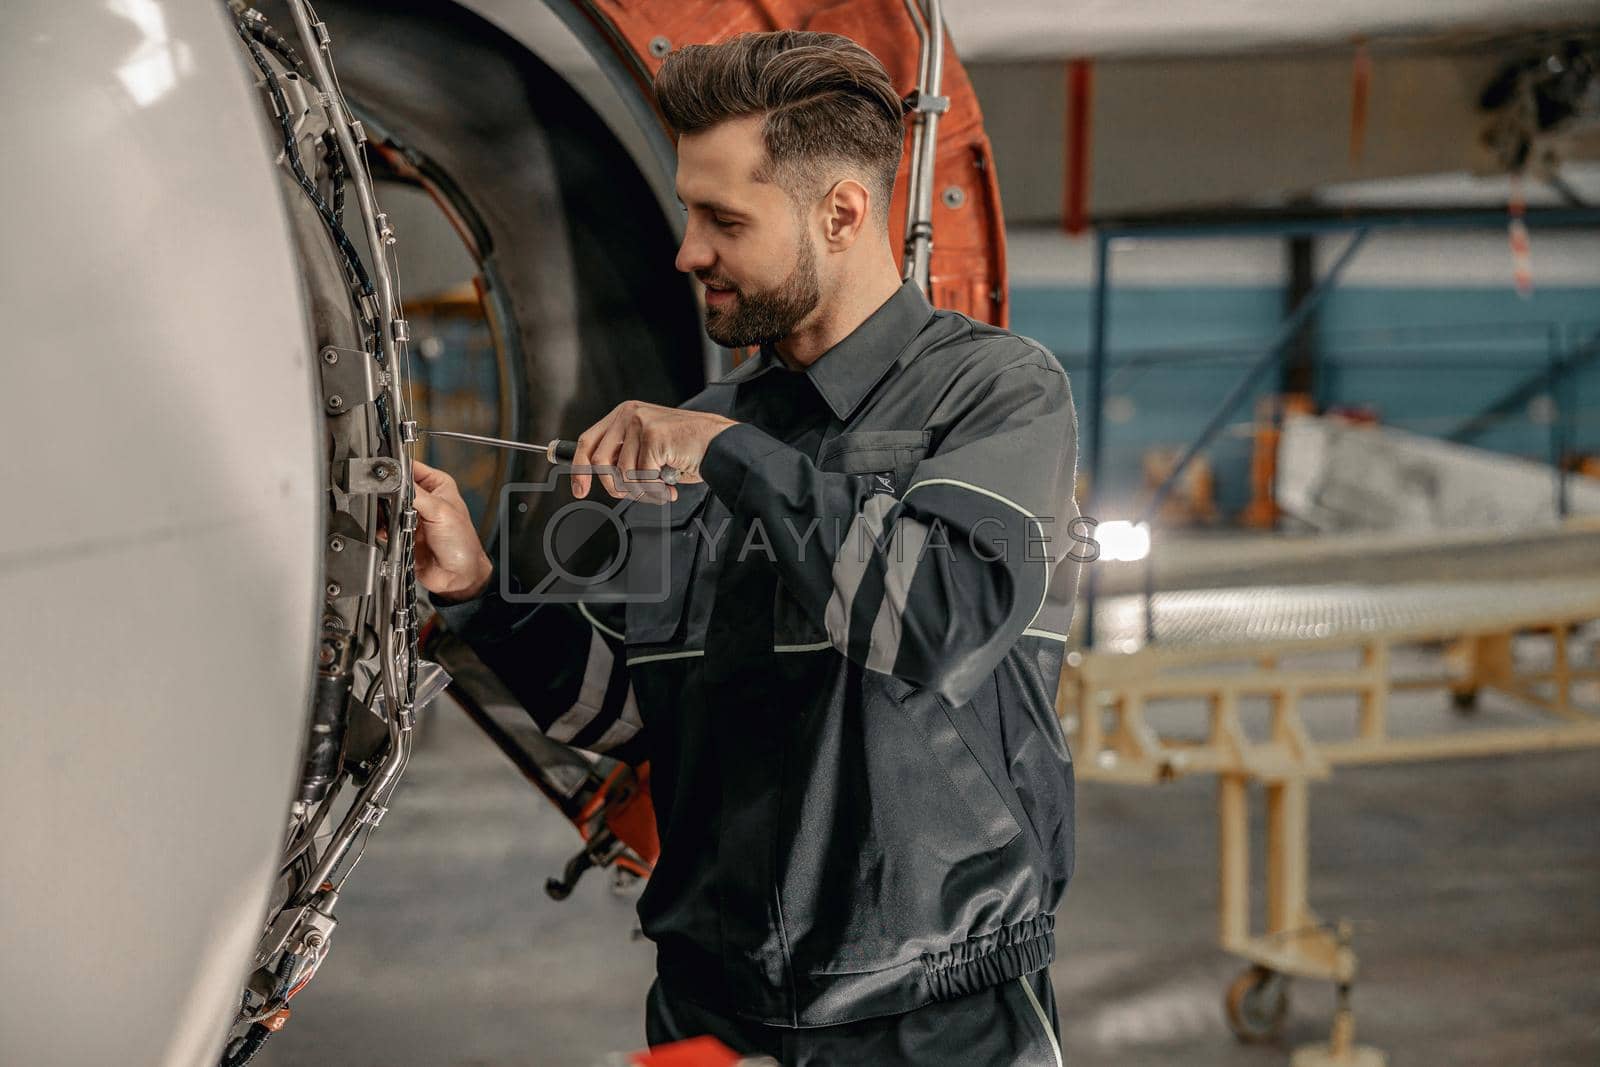 Royalty free image of Male aviation mechanic repairing aircraft in hangar by Yaroslav_astakhov